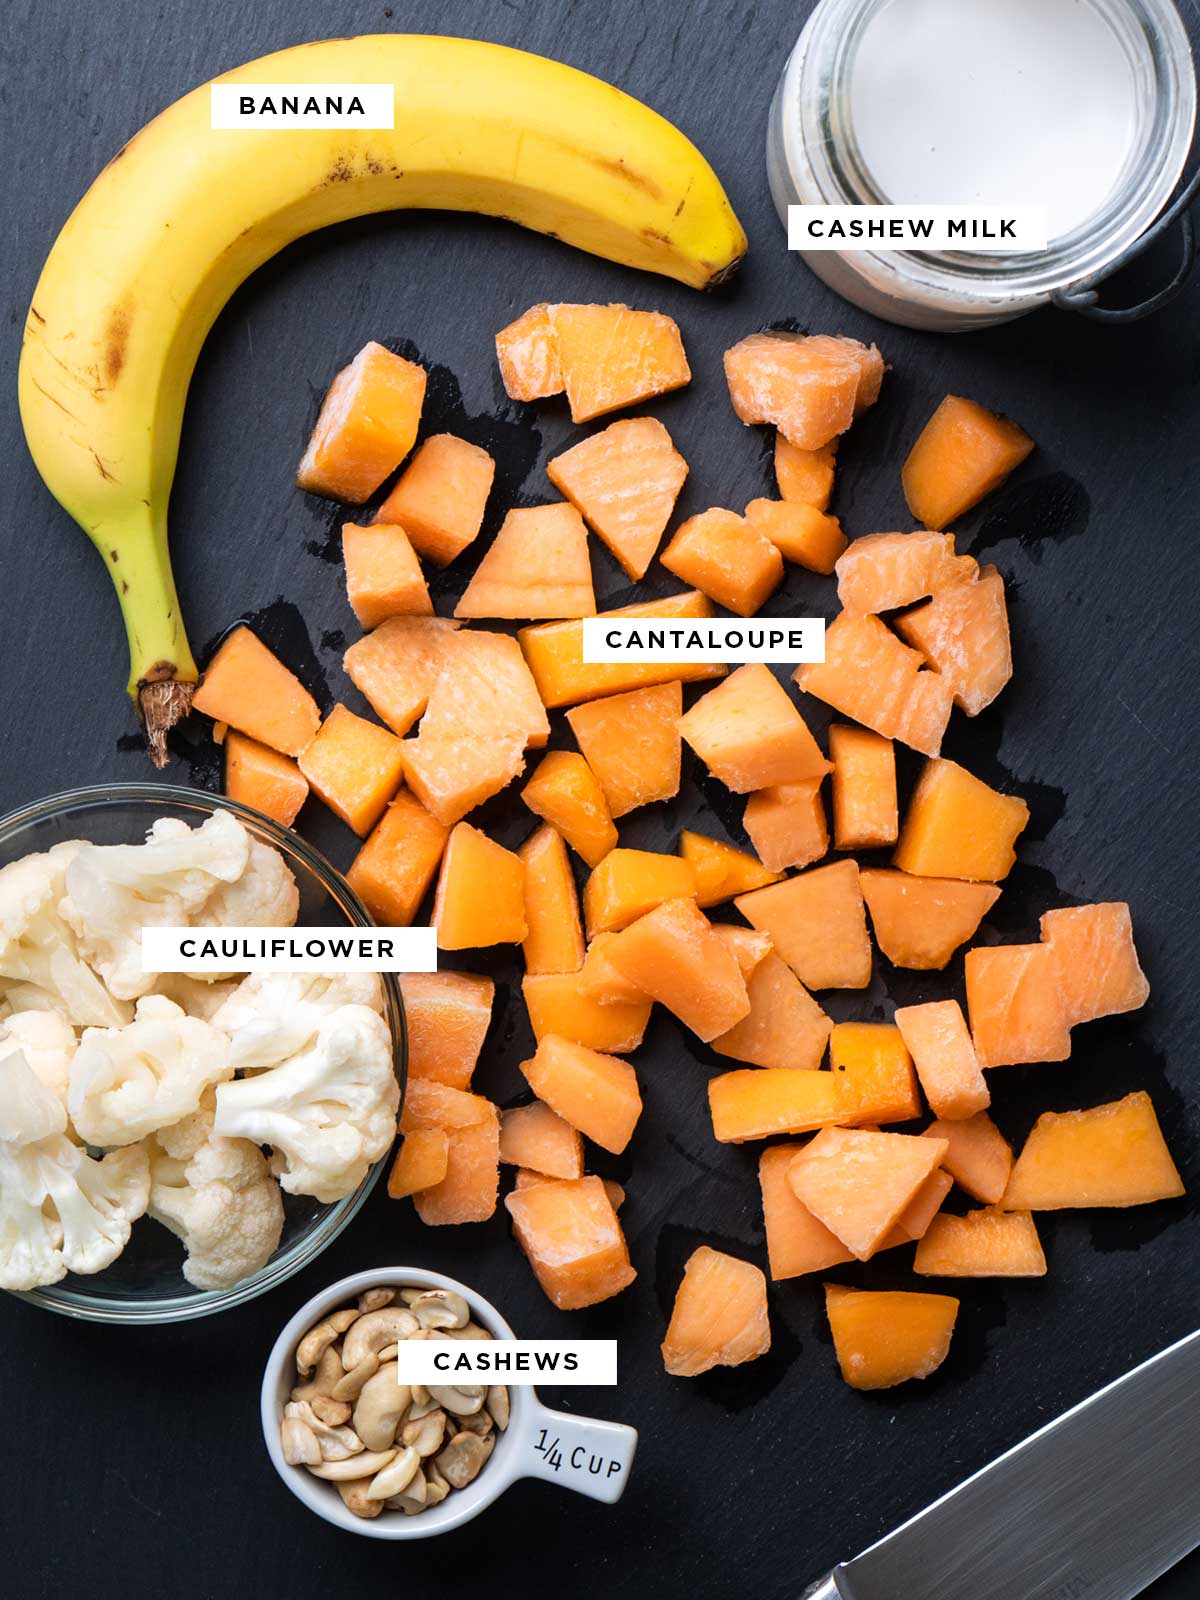 ingredients for a cantaloupe banana smoothie including banana, frozen cantaloupe, cauliflower, cashews and cashew milk